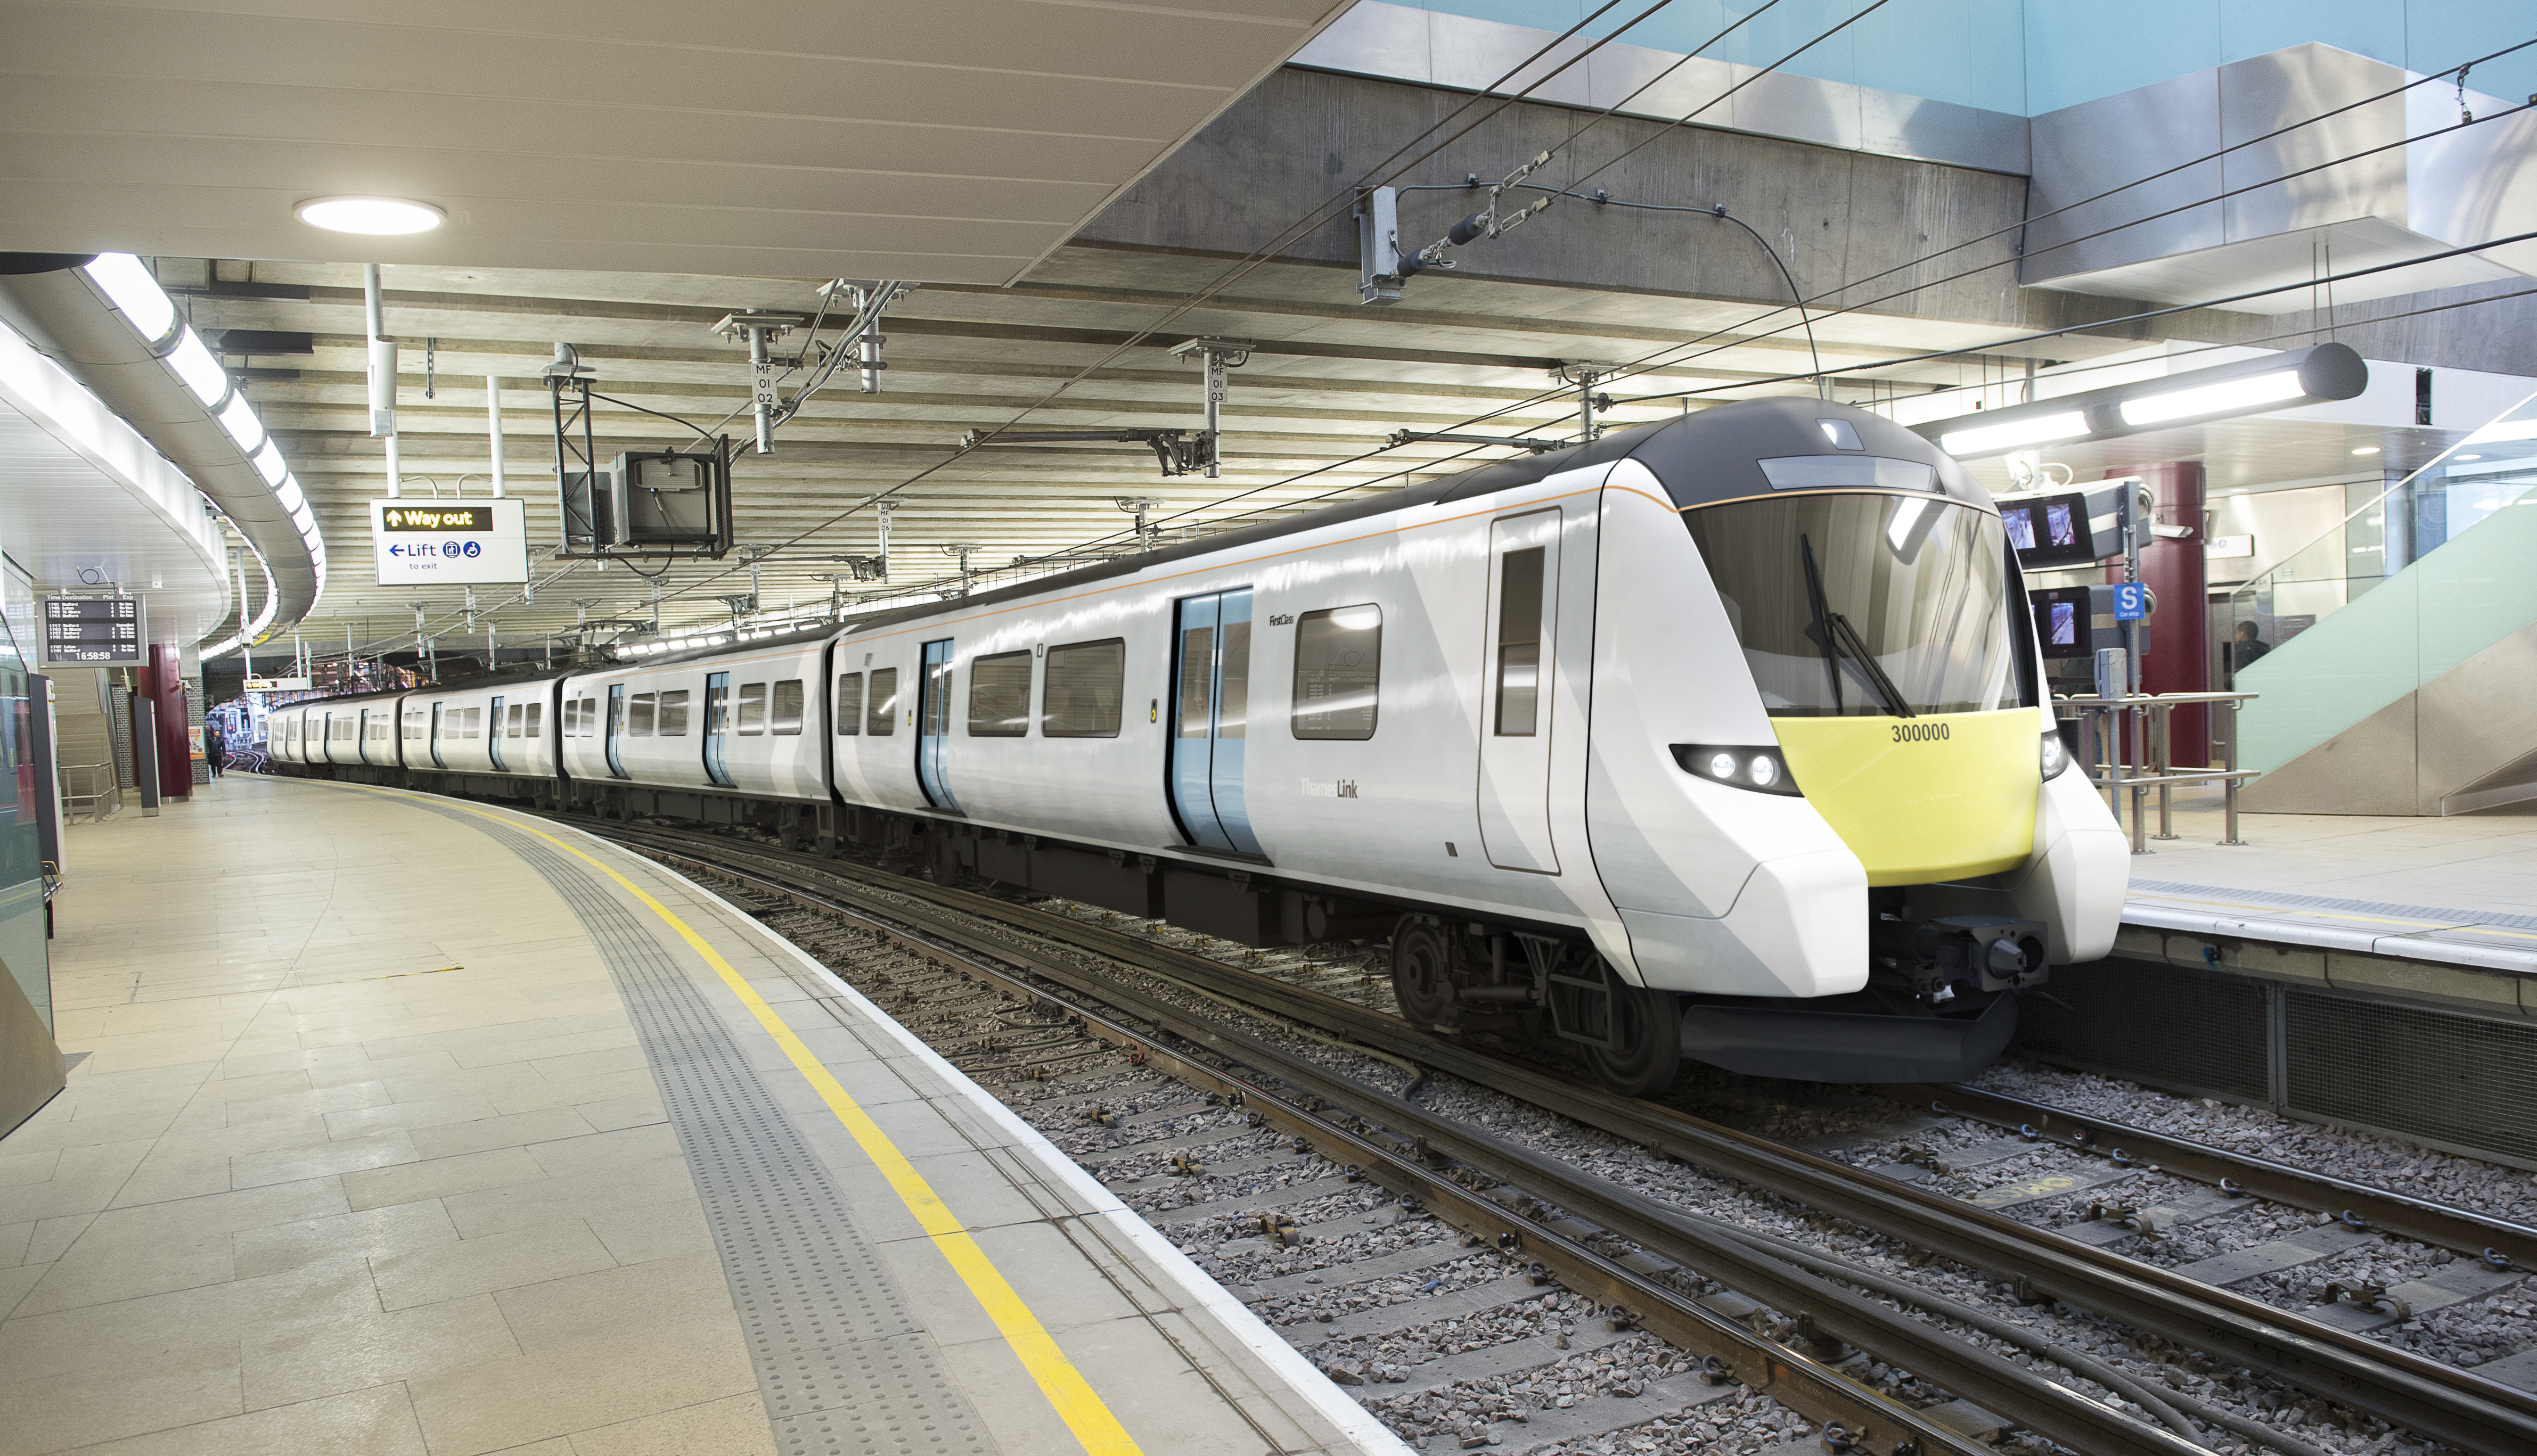 How British will Britain's new trains be? | Global Rail News